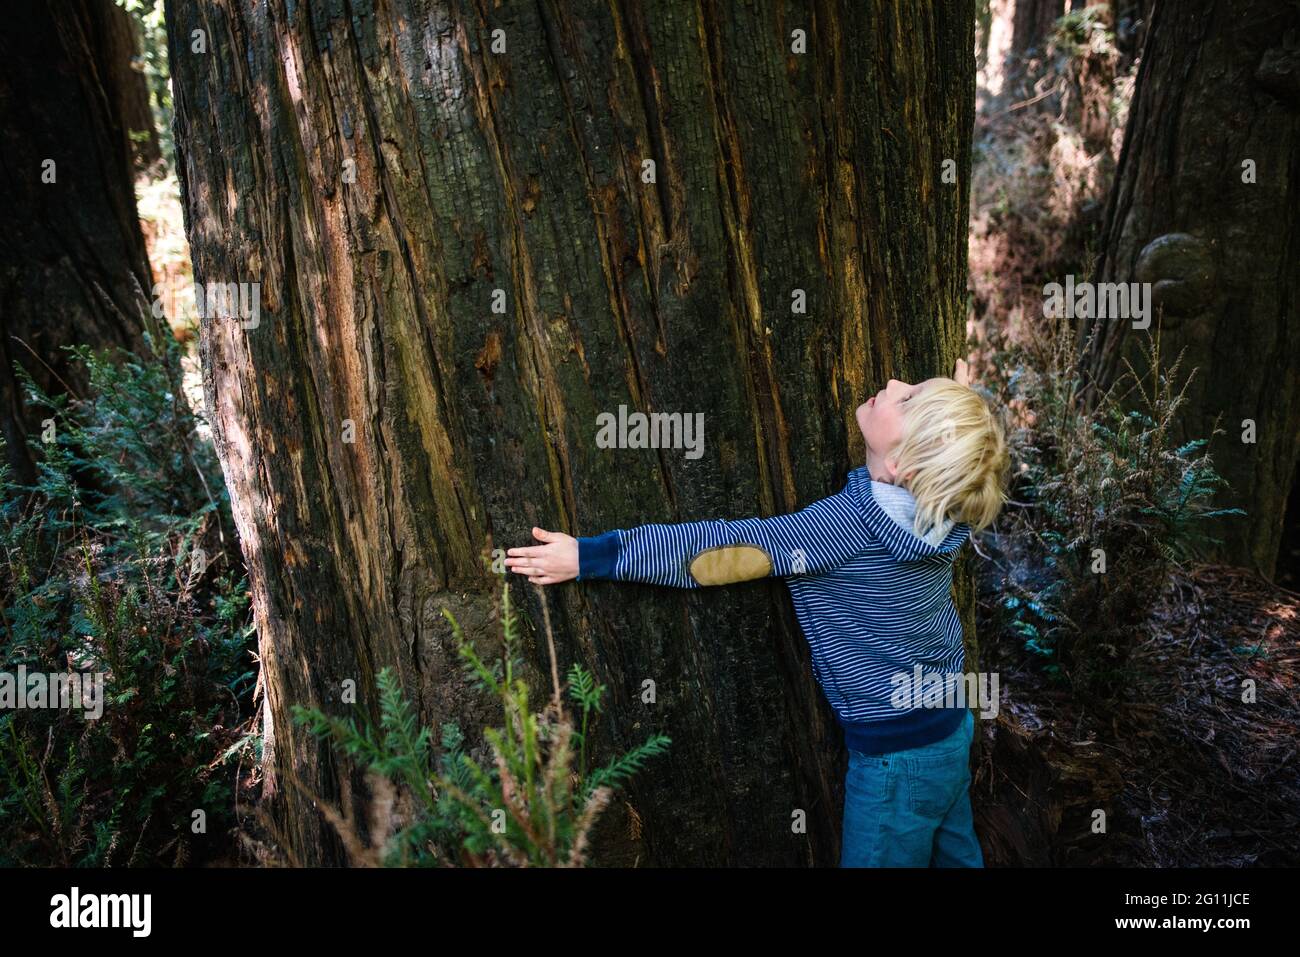 USA, California, Big Sur, Boy hugging big tree trunk Stock Photo